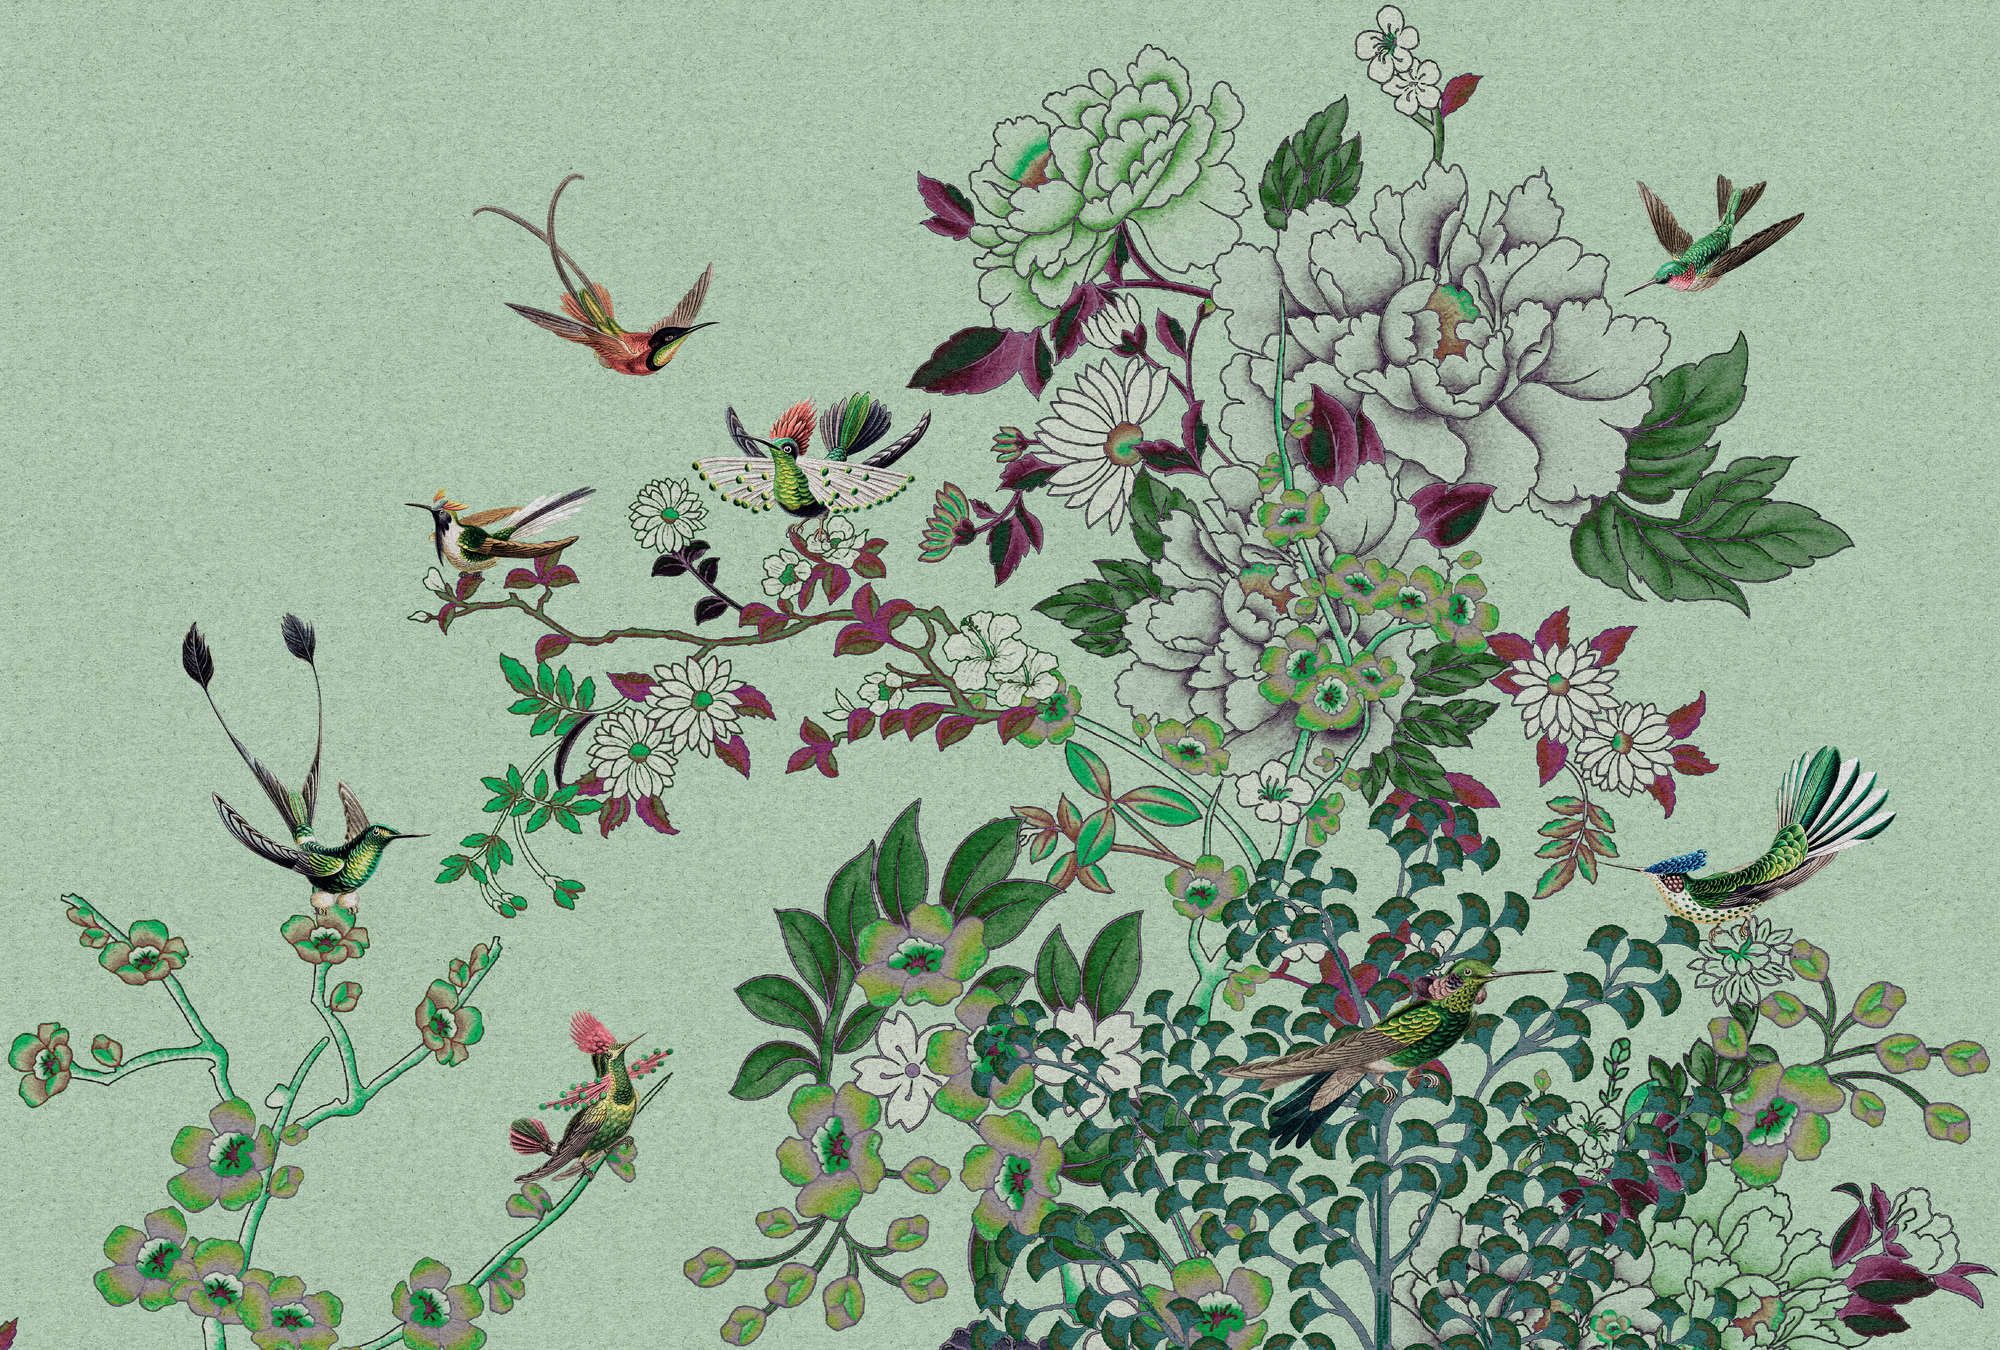             Fotomural »madras 1« - Motivo de flores verdes con pájaros sobre textura de papel kraft - Material sin tejer liso, ligeramente nacarado
        